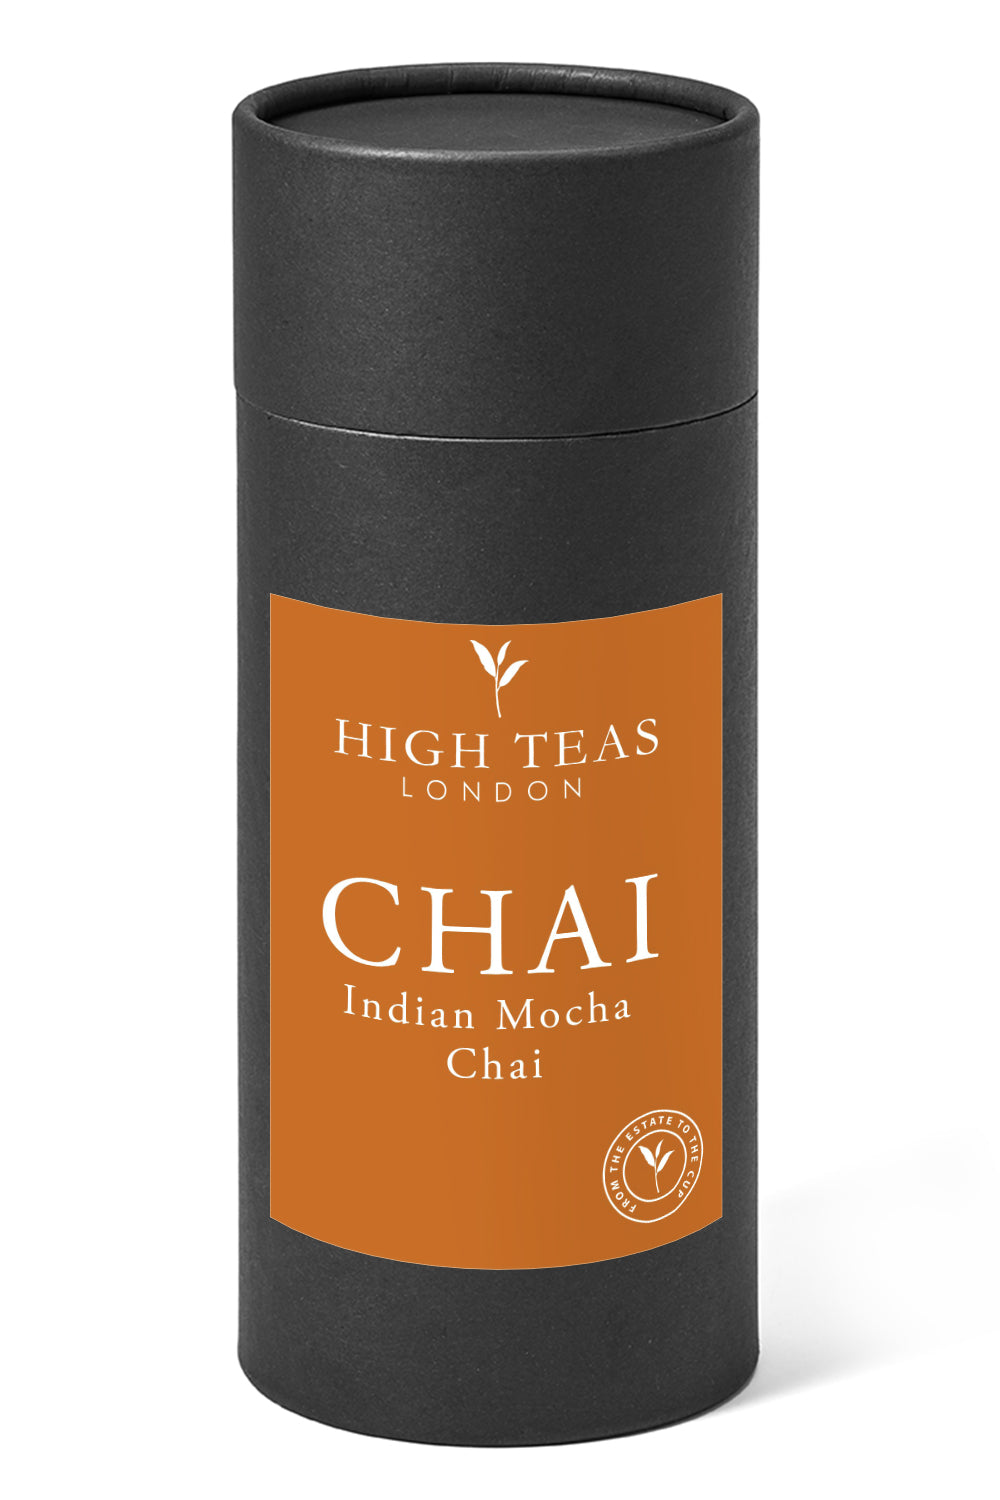 Indian Mocha Chai-150g gift-Loose Leaf Tea-High Teas